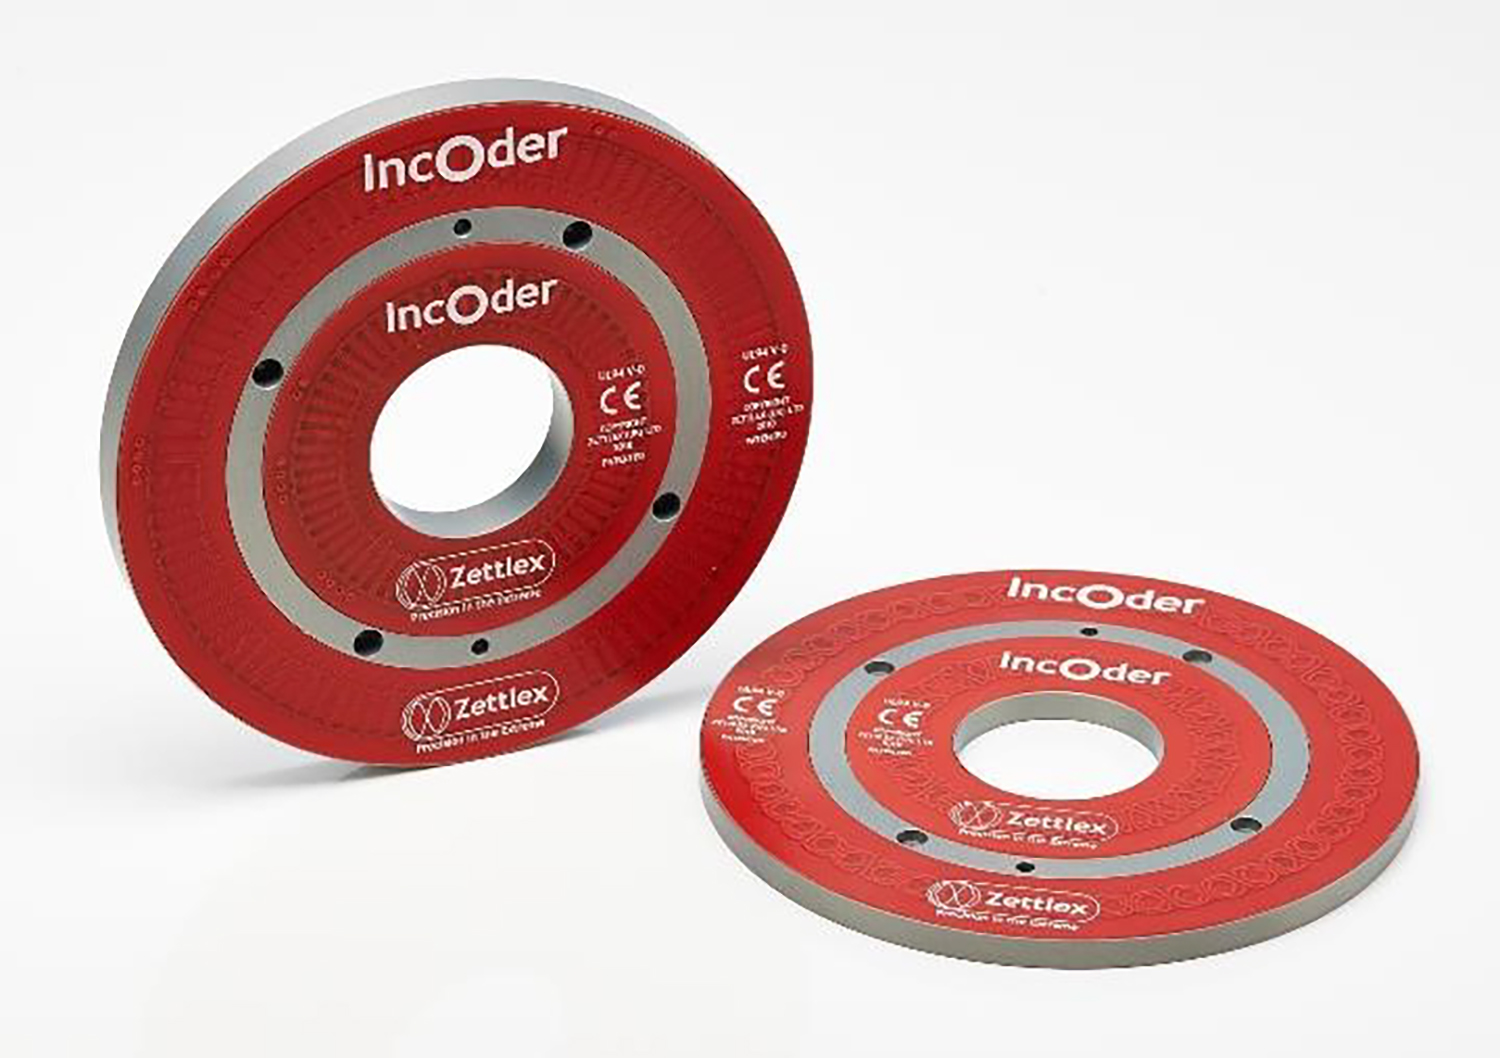 Celera Motion - IncOder® Inductive Angle Encoders.